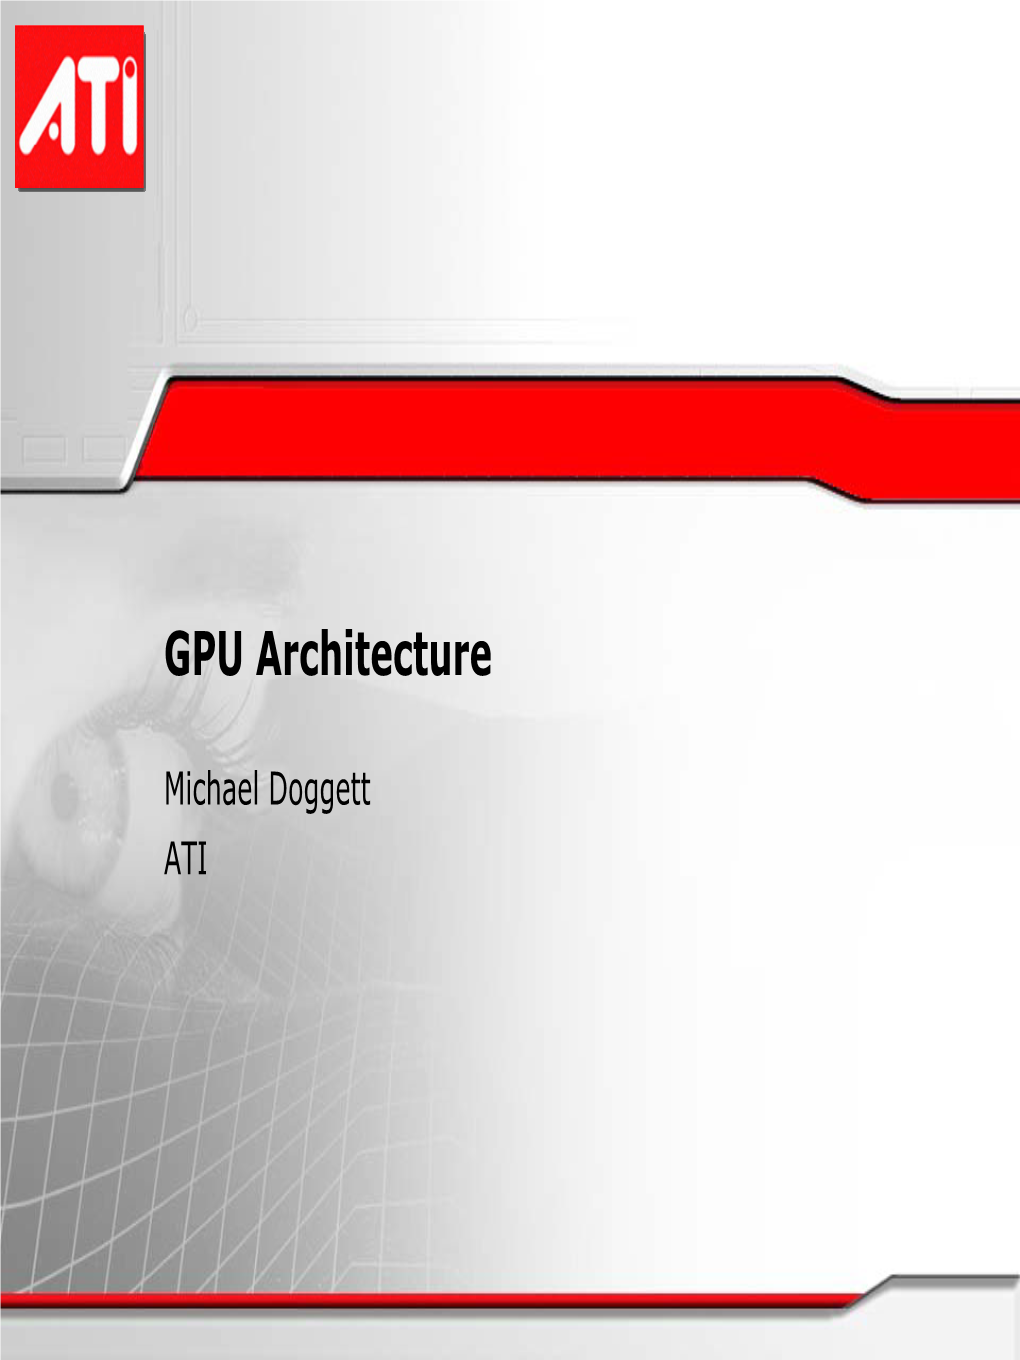 GPU Architecture